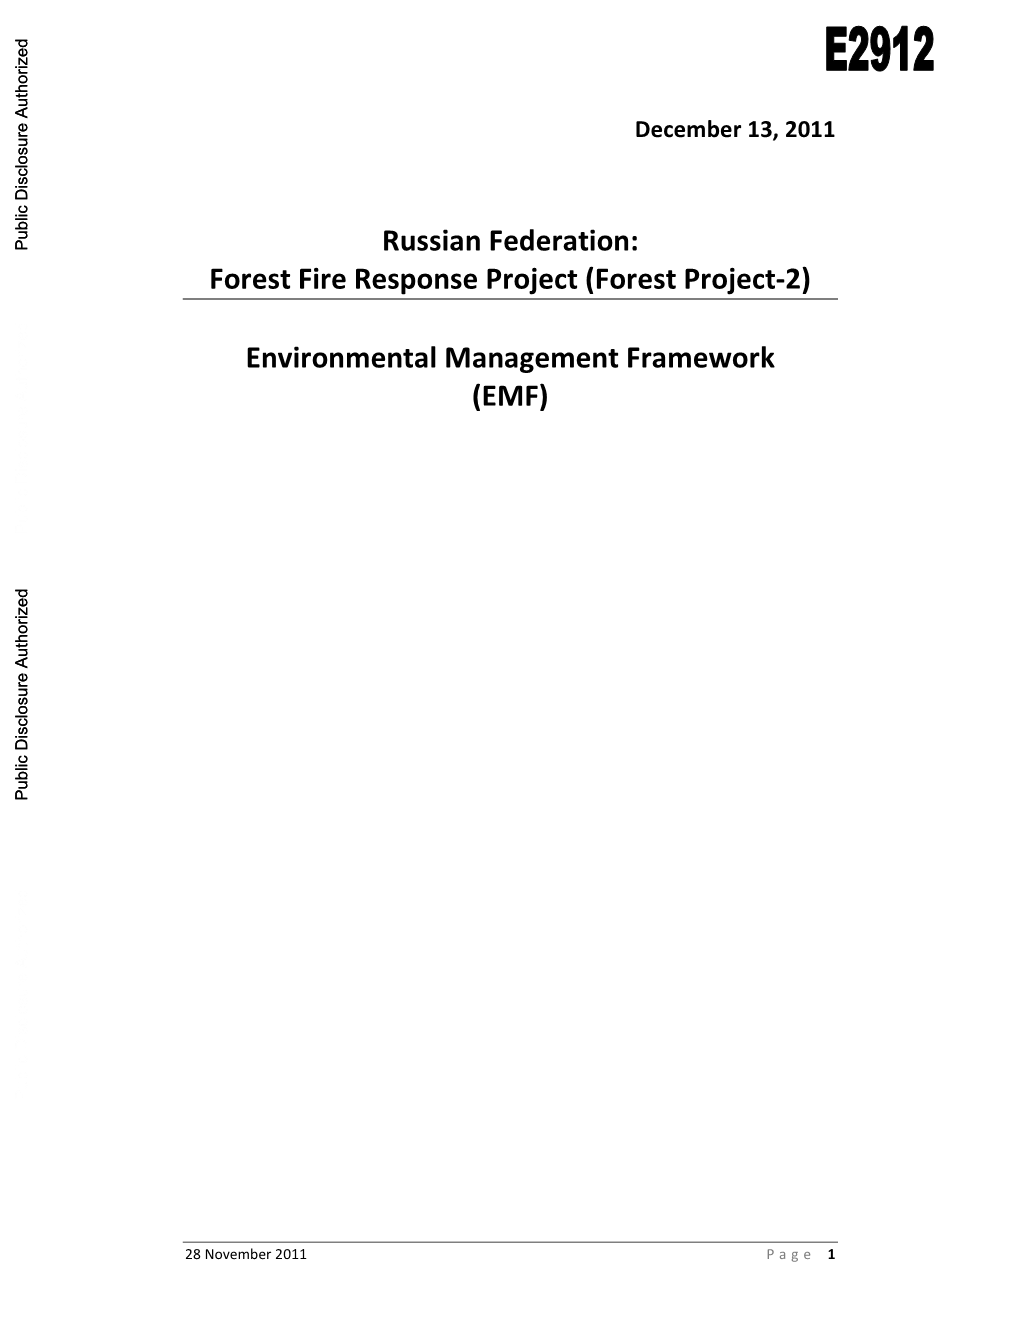 Environmental Management Framework (EMF)